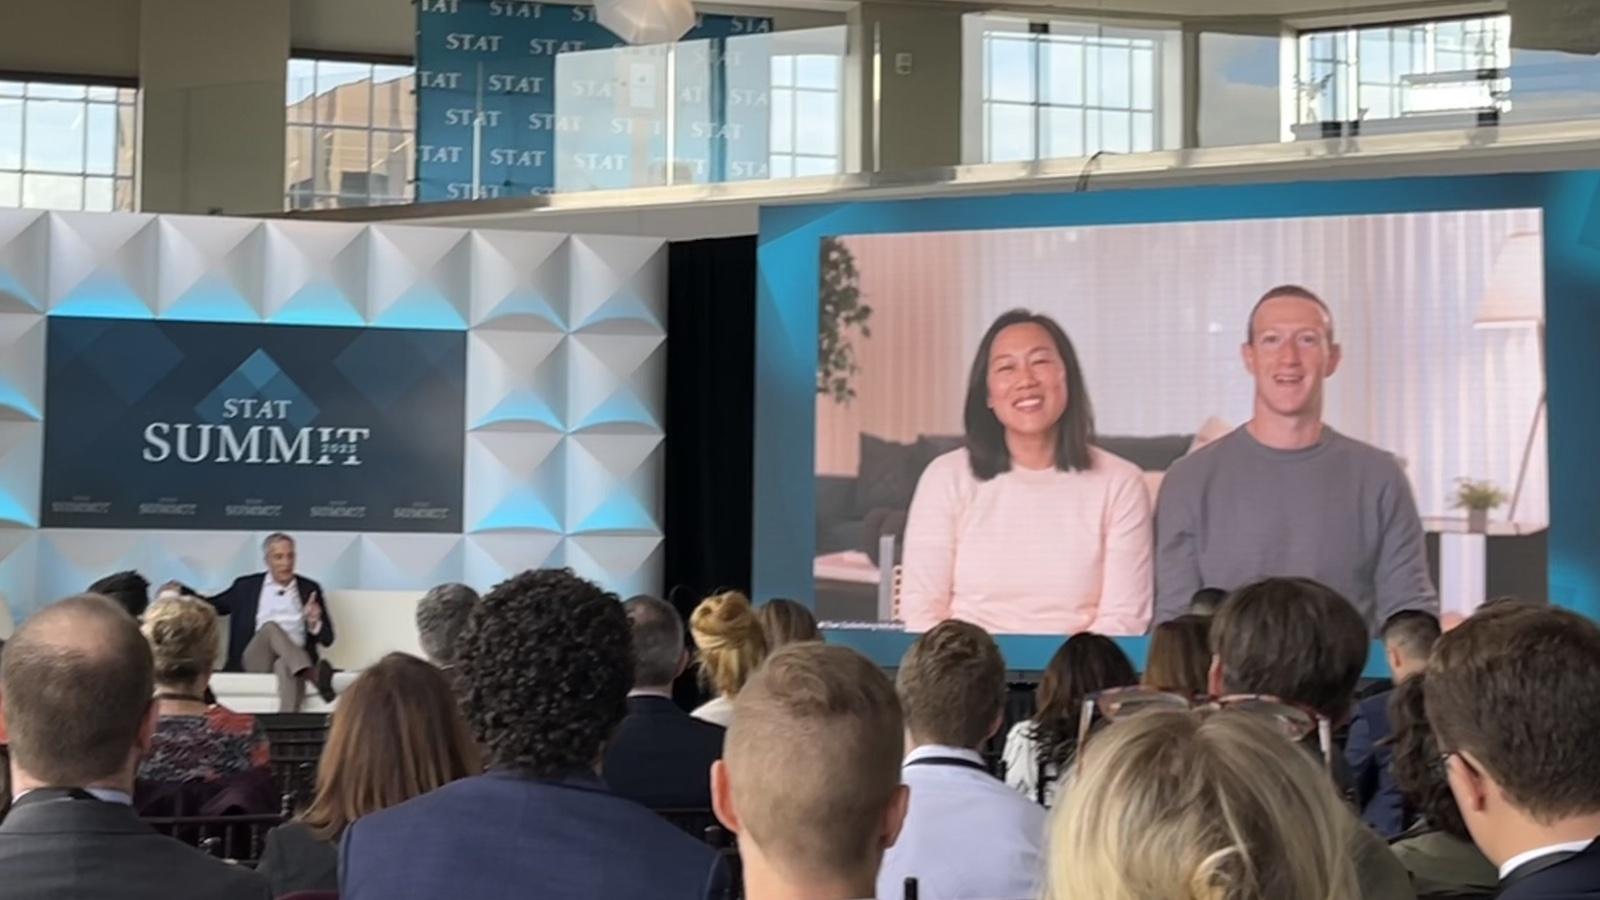 Mark Zuckerberg and Priscilla Chan appear virtually at the STAT Summit in Boston